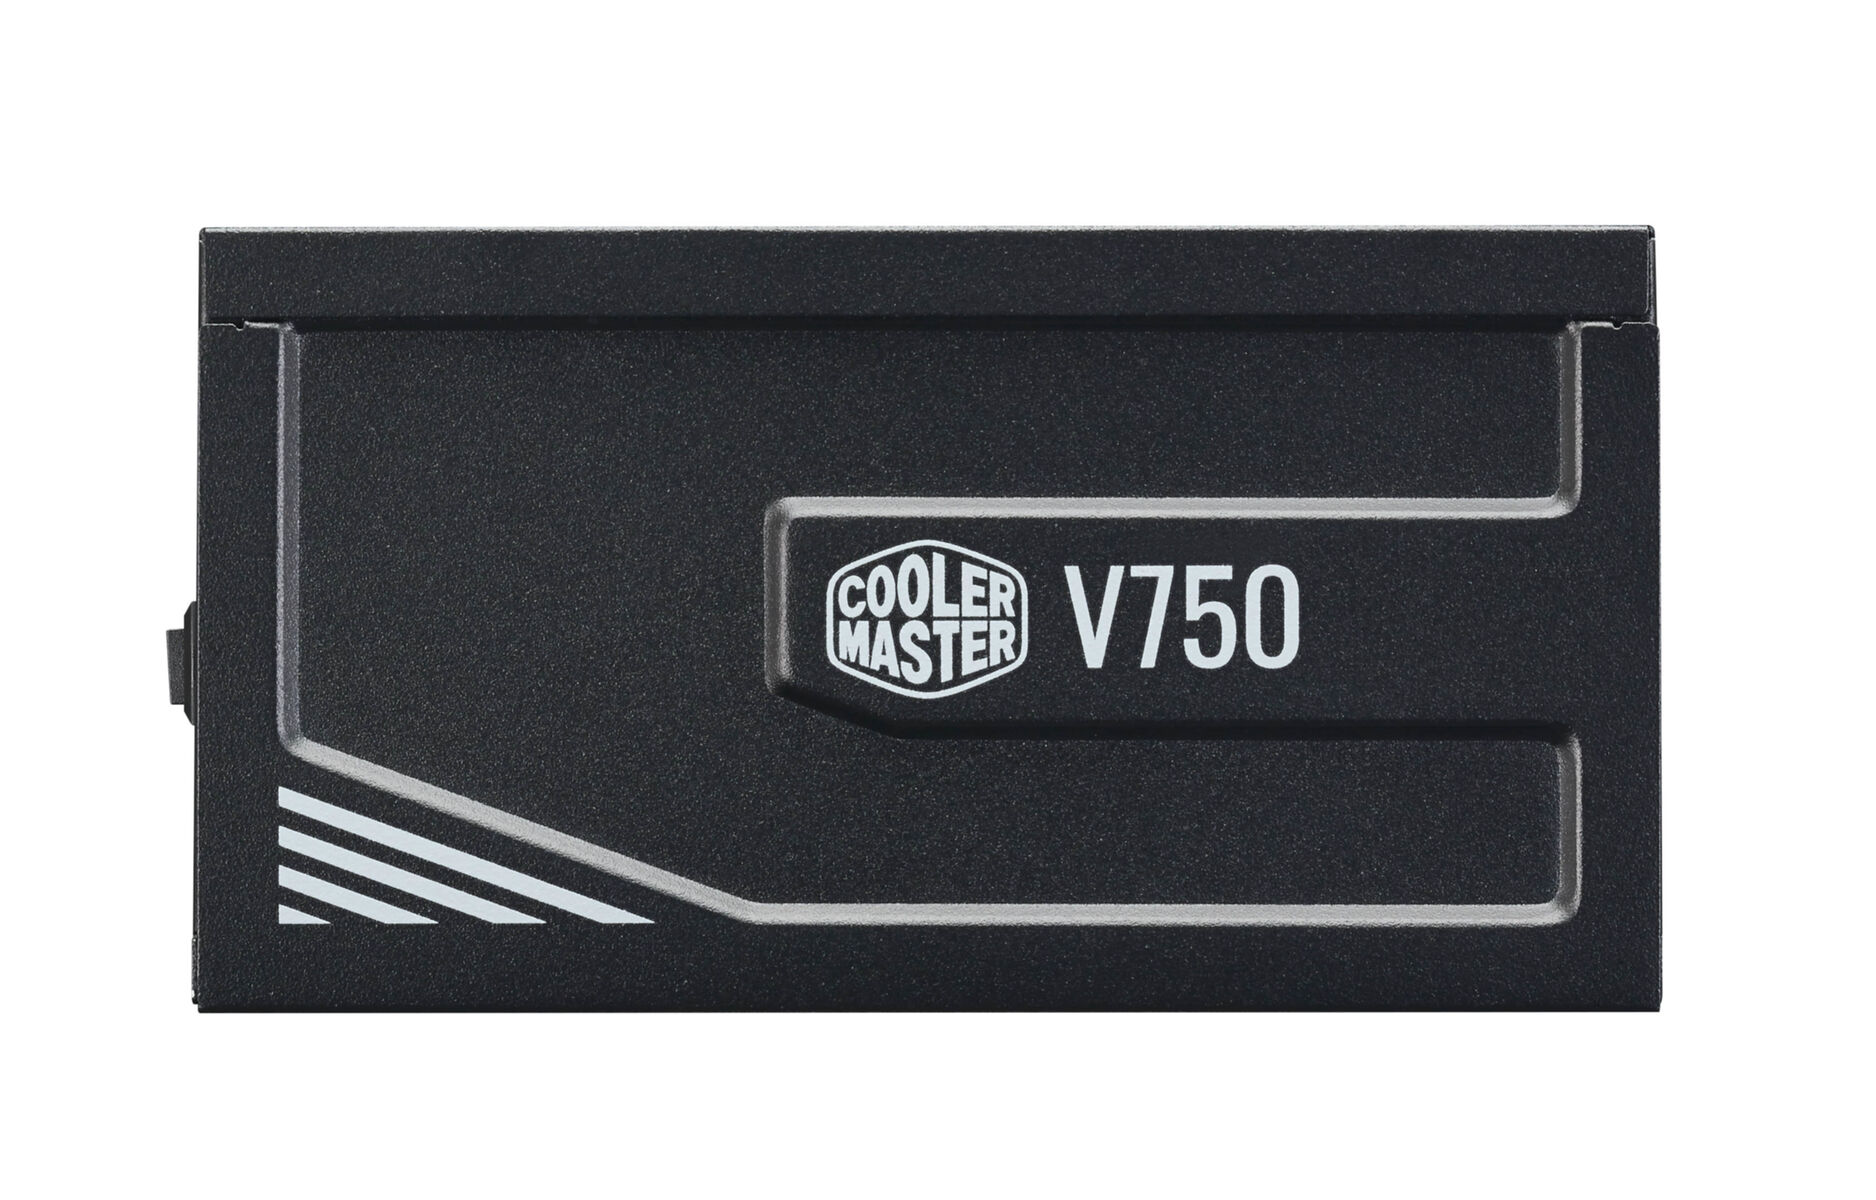 750 Netzteil V750 MASTER Gold 80+ COOLER PC Watt Gold-V2